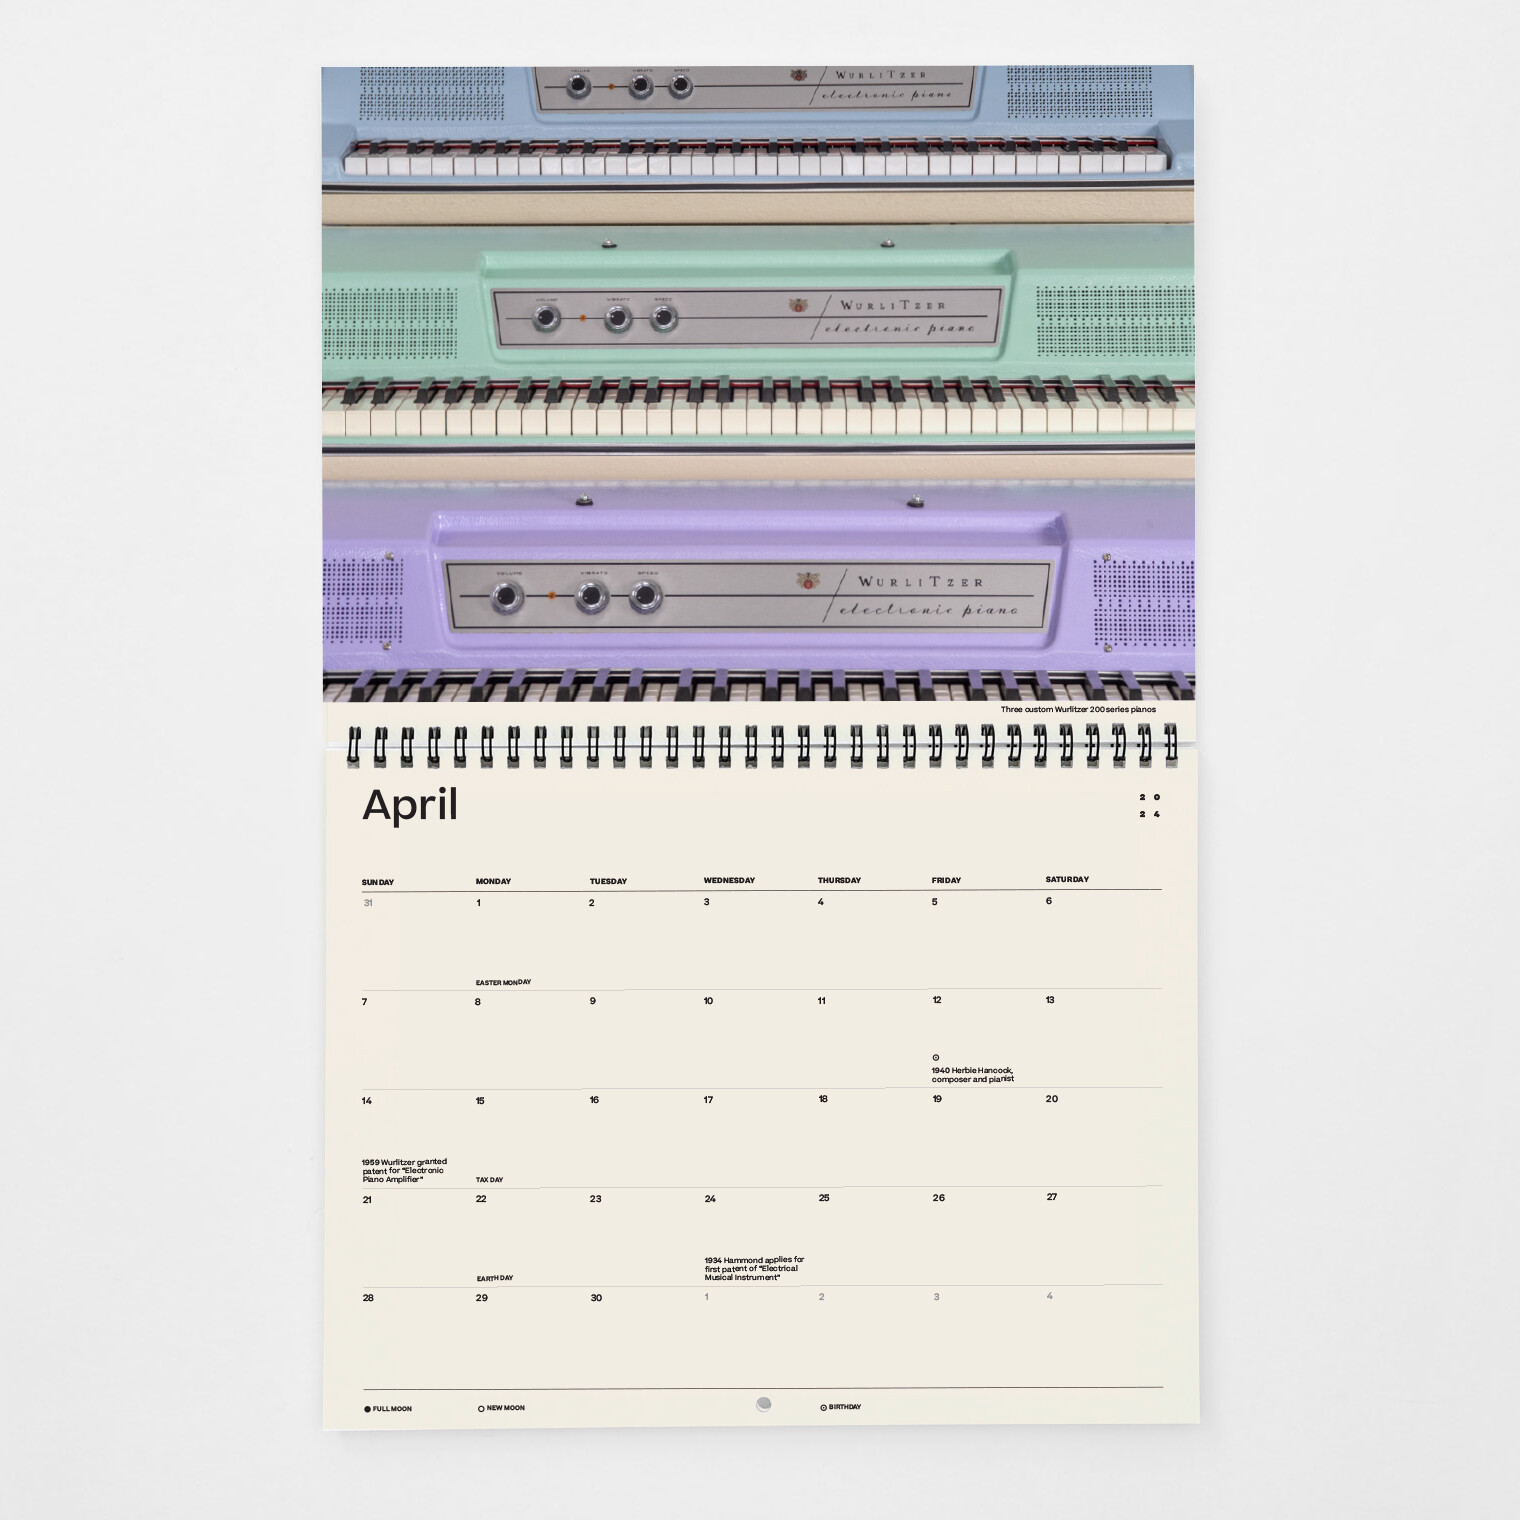 2024 Piano Calendar - The Chicago Electric Piano Co.